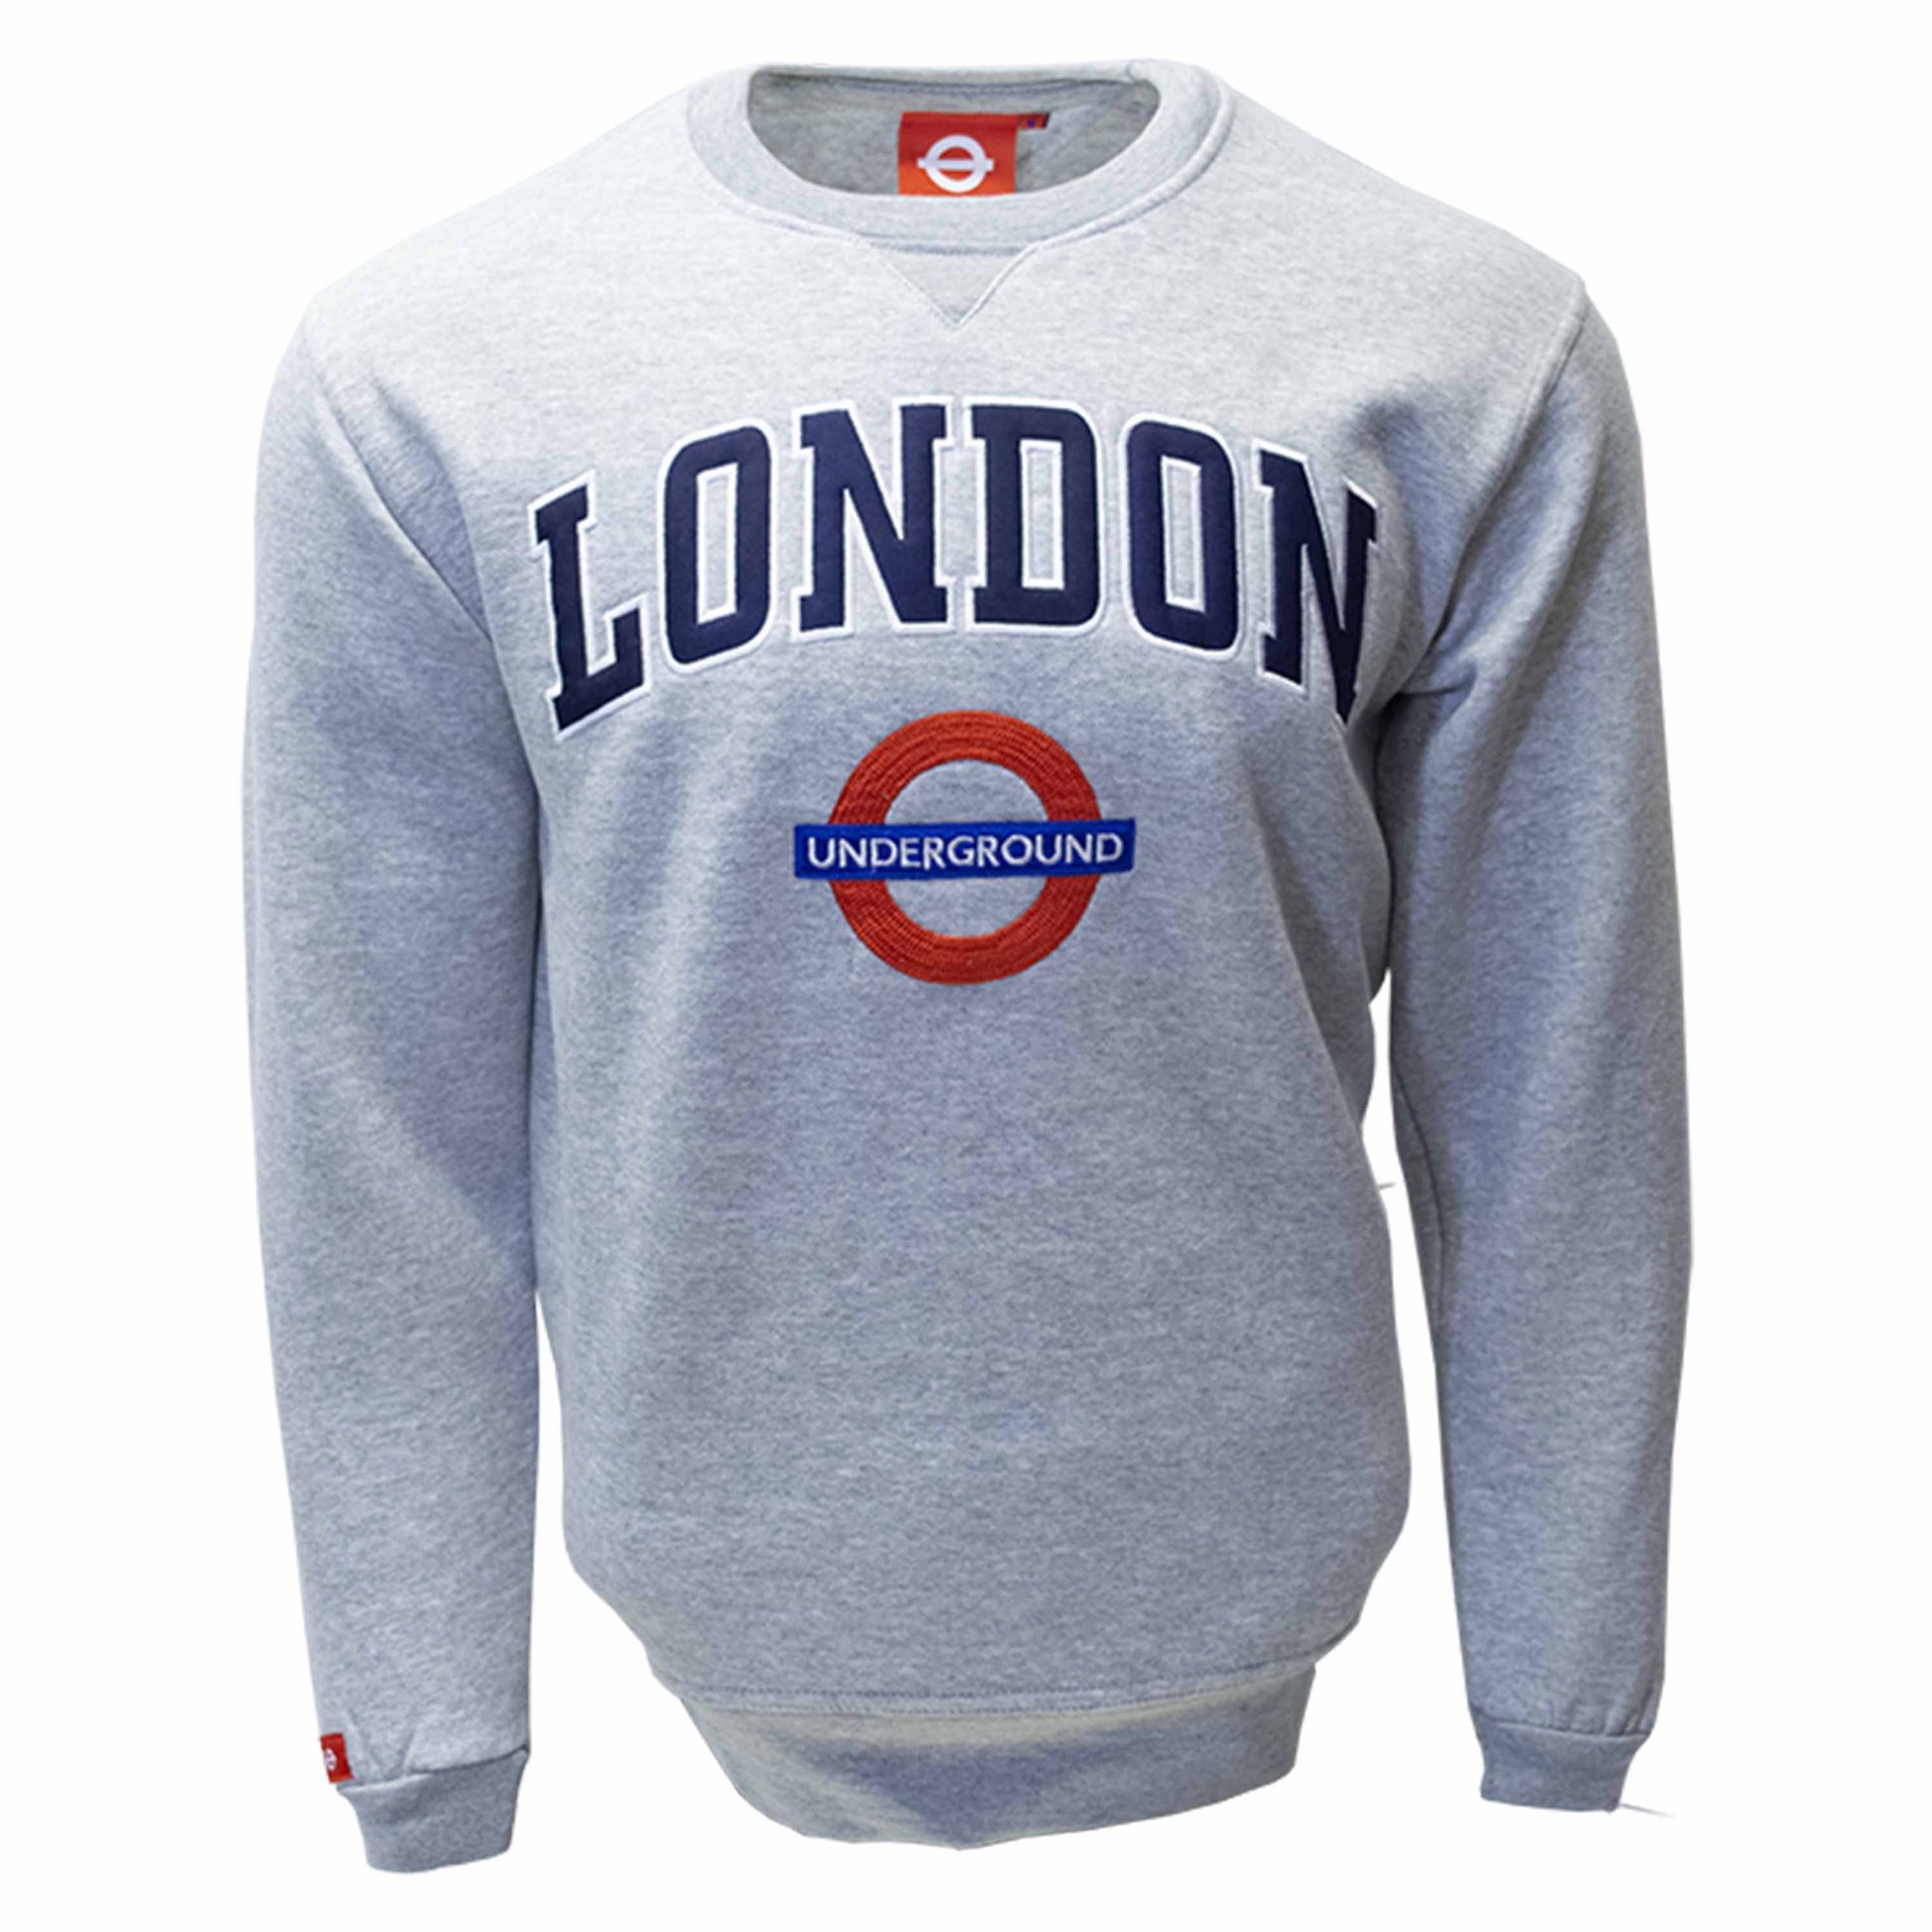 London Underground Heather Grey Sweatshirt - Unisex - TFL Merchandise